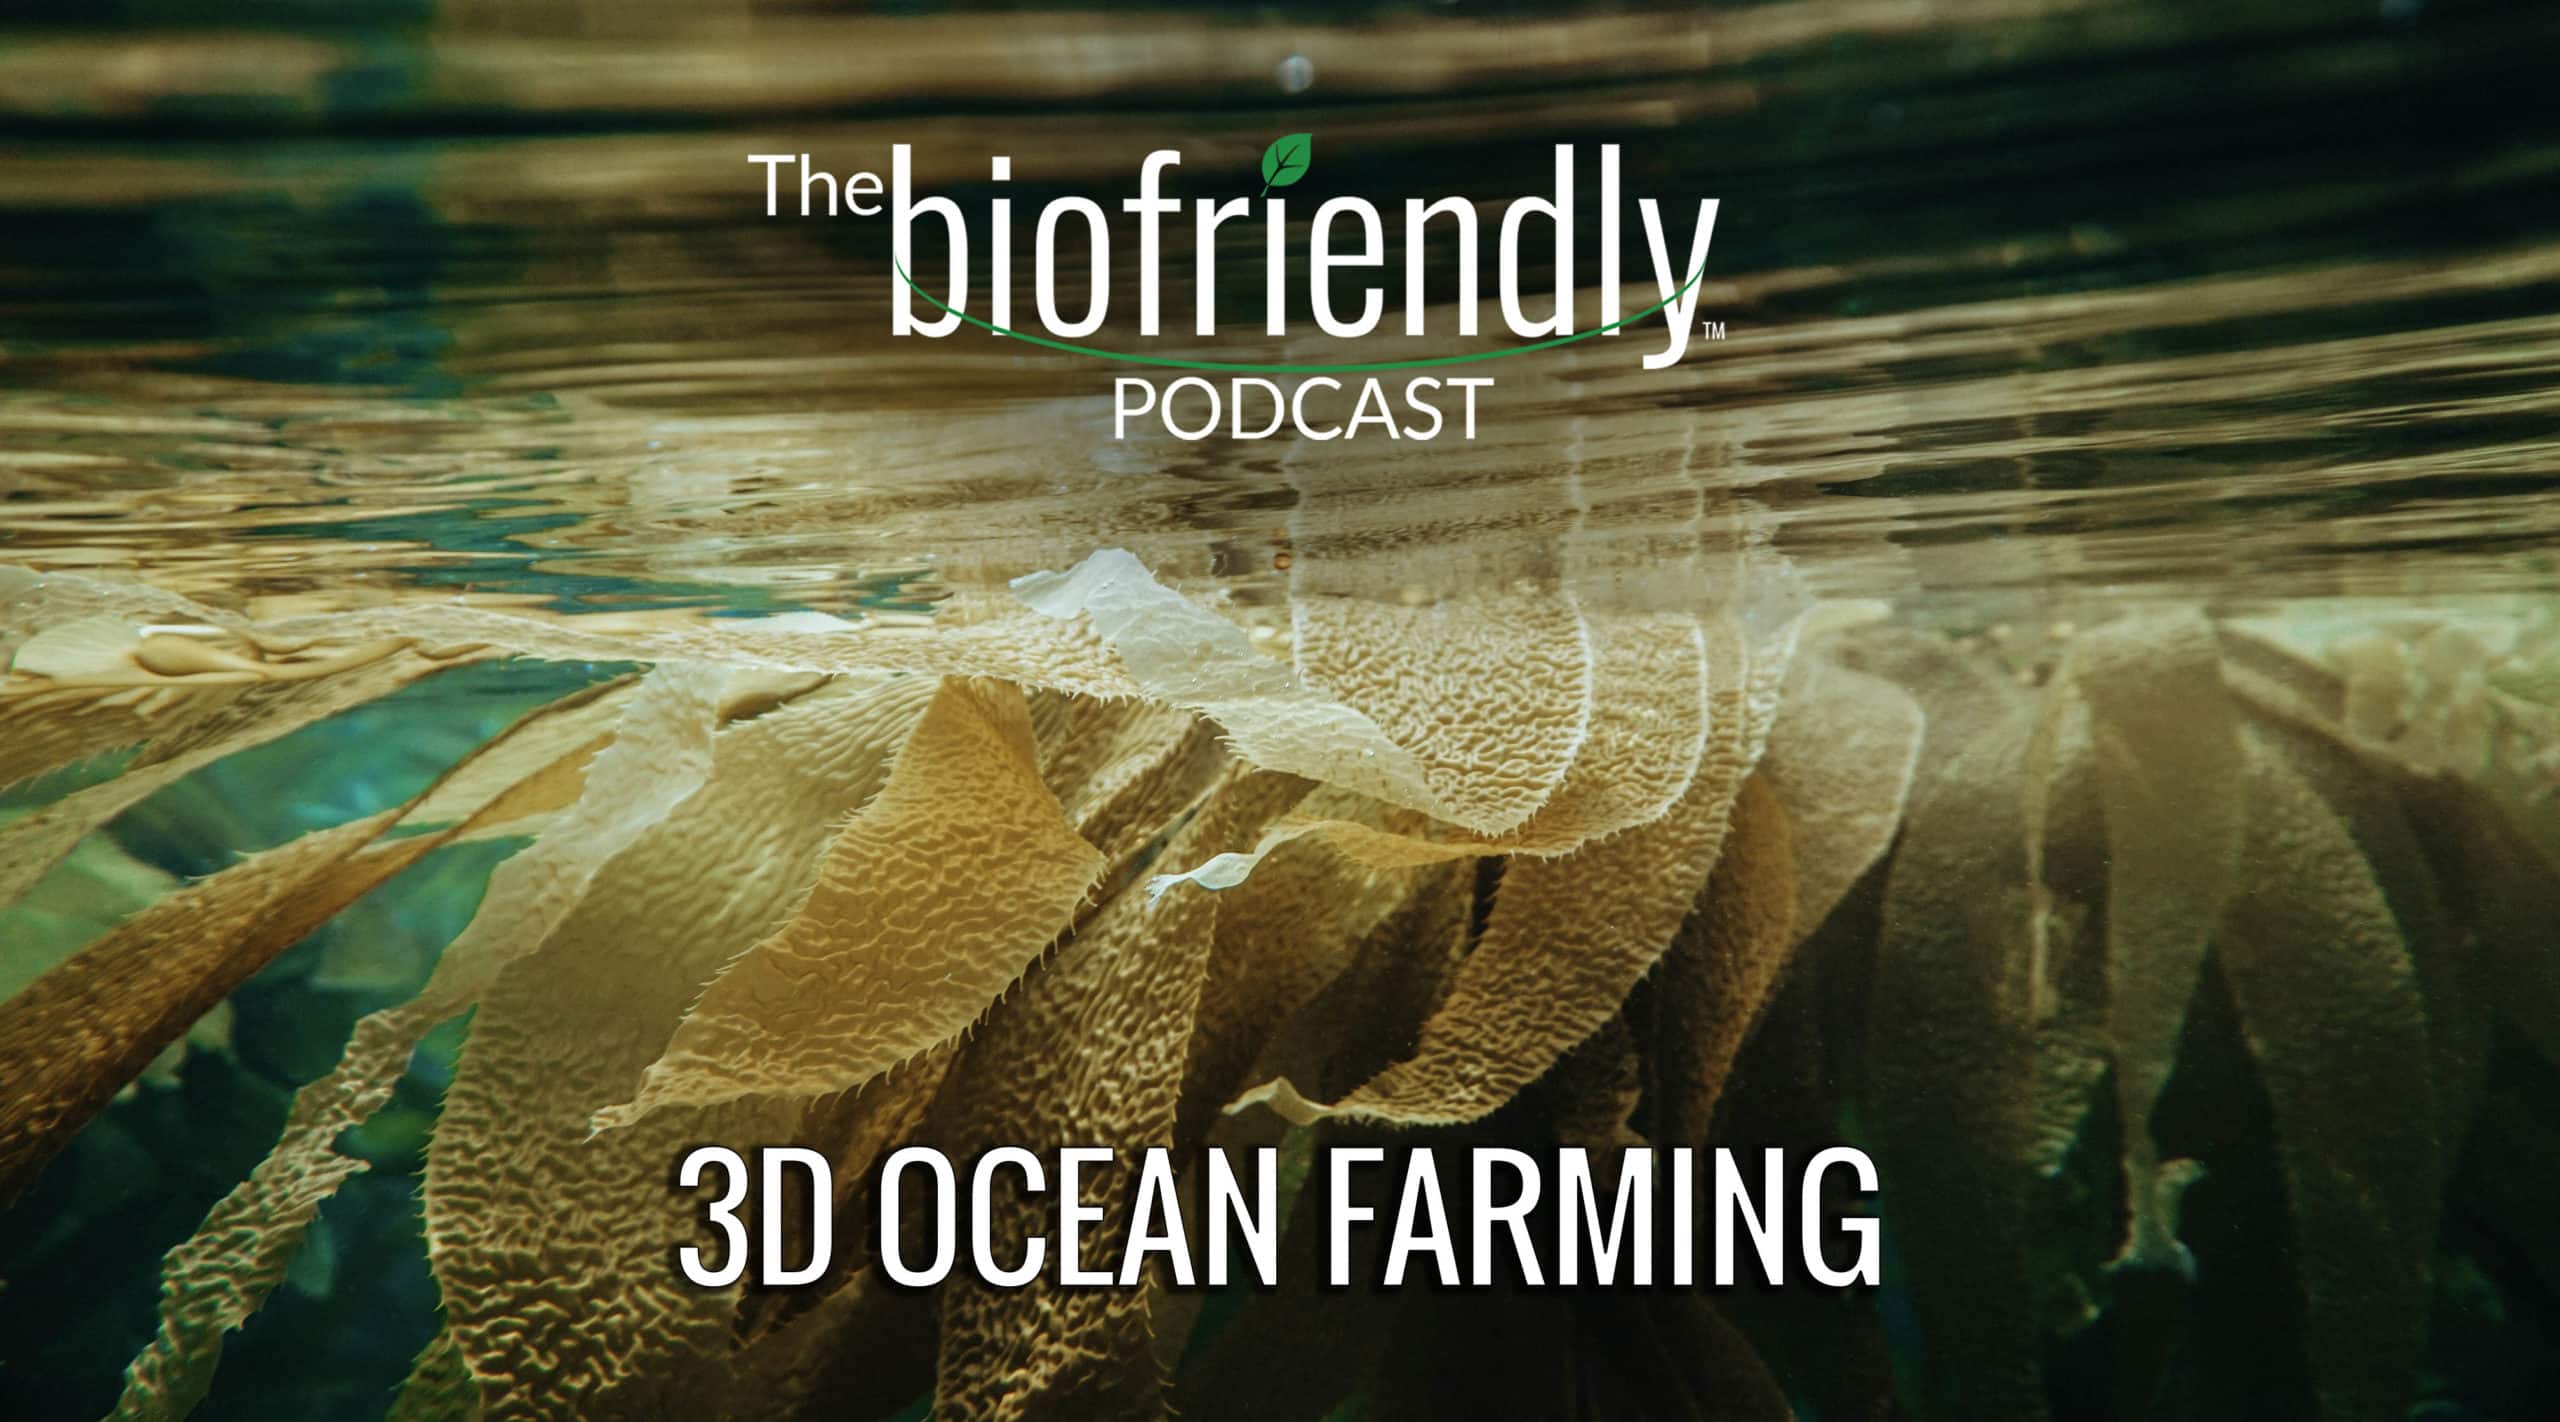 The Biofriendly Podcast - Episode 68 - 3D Ocean Farming